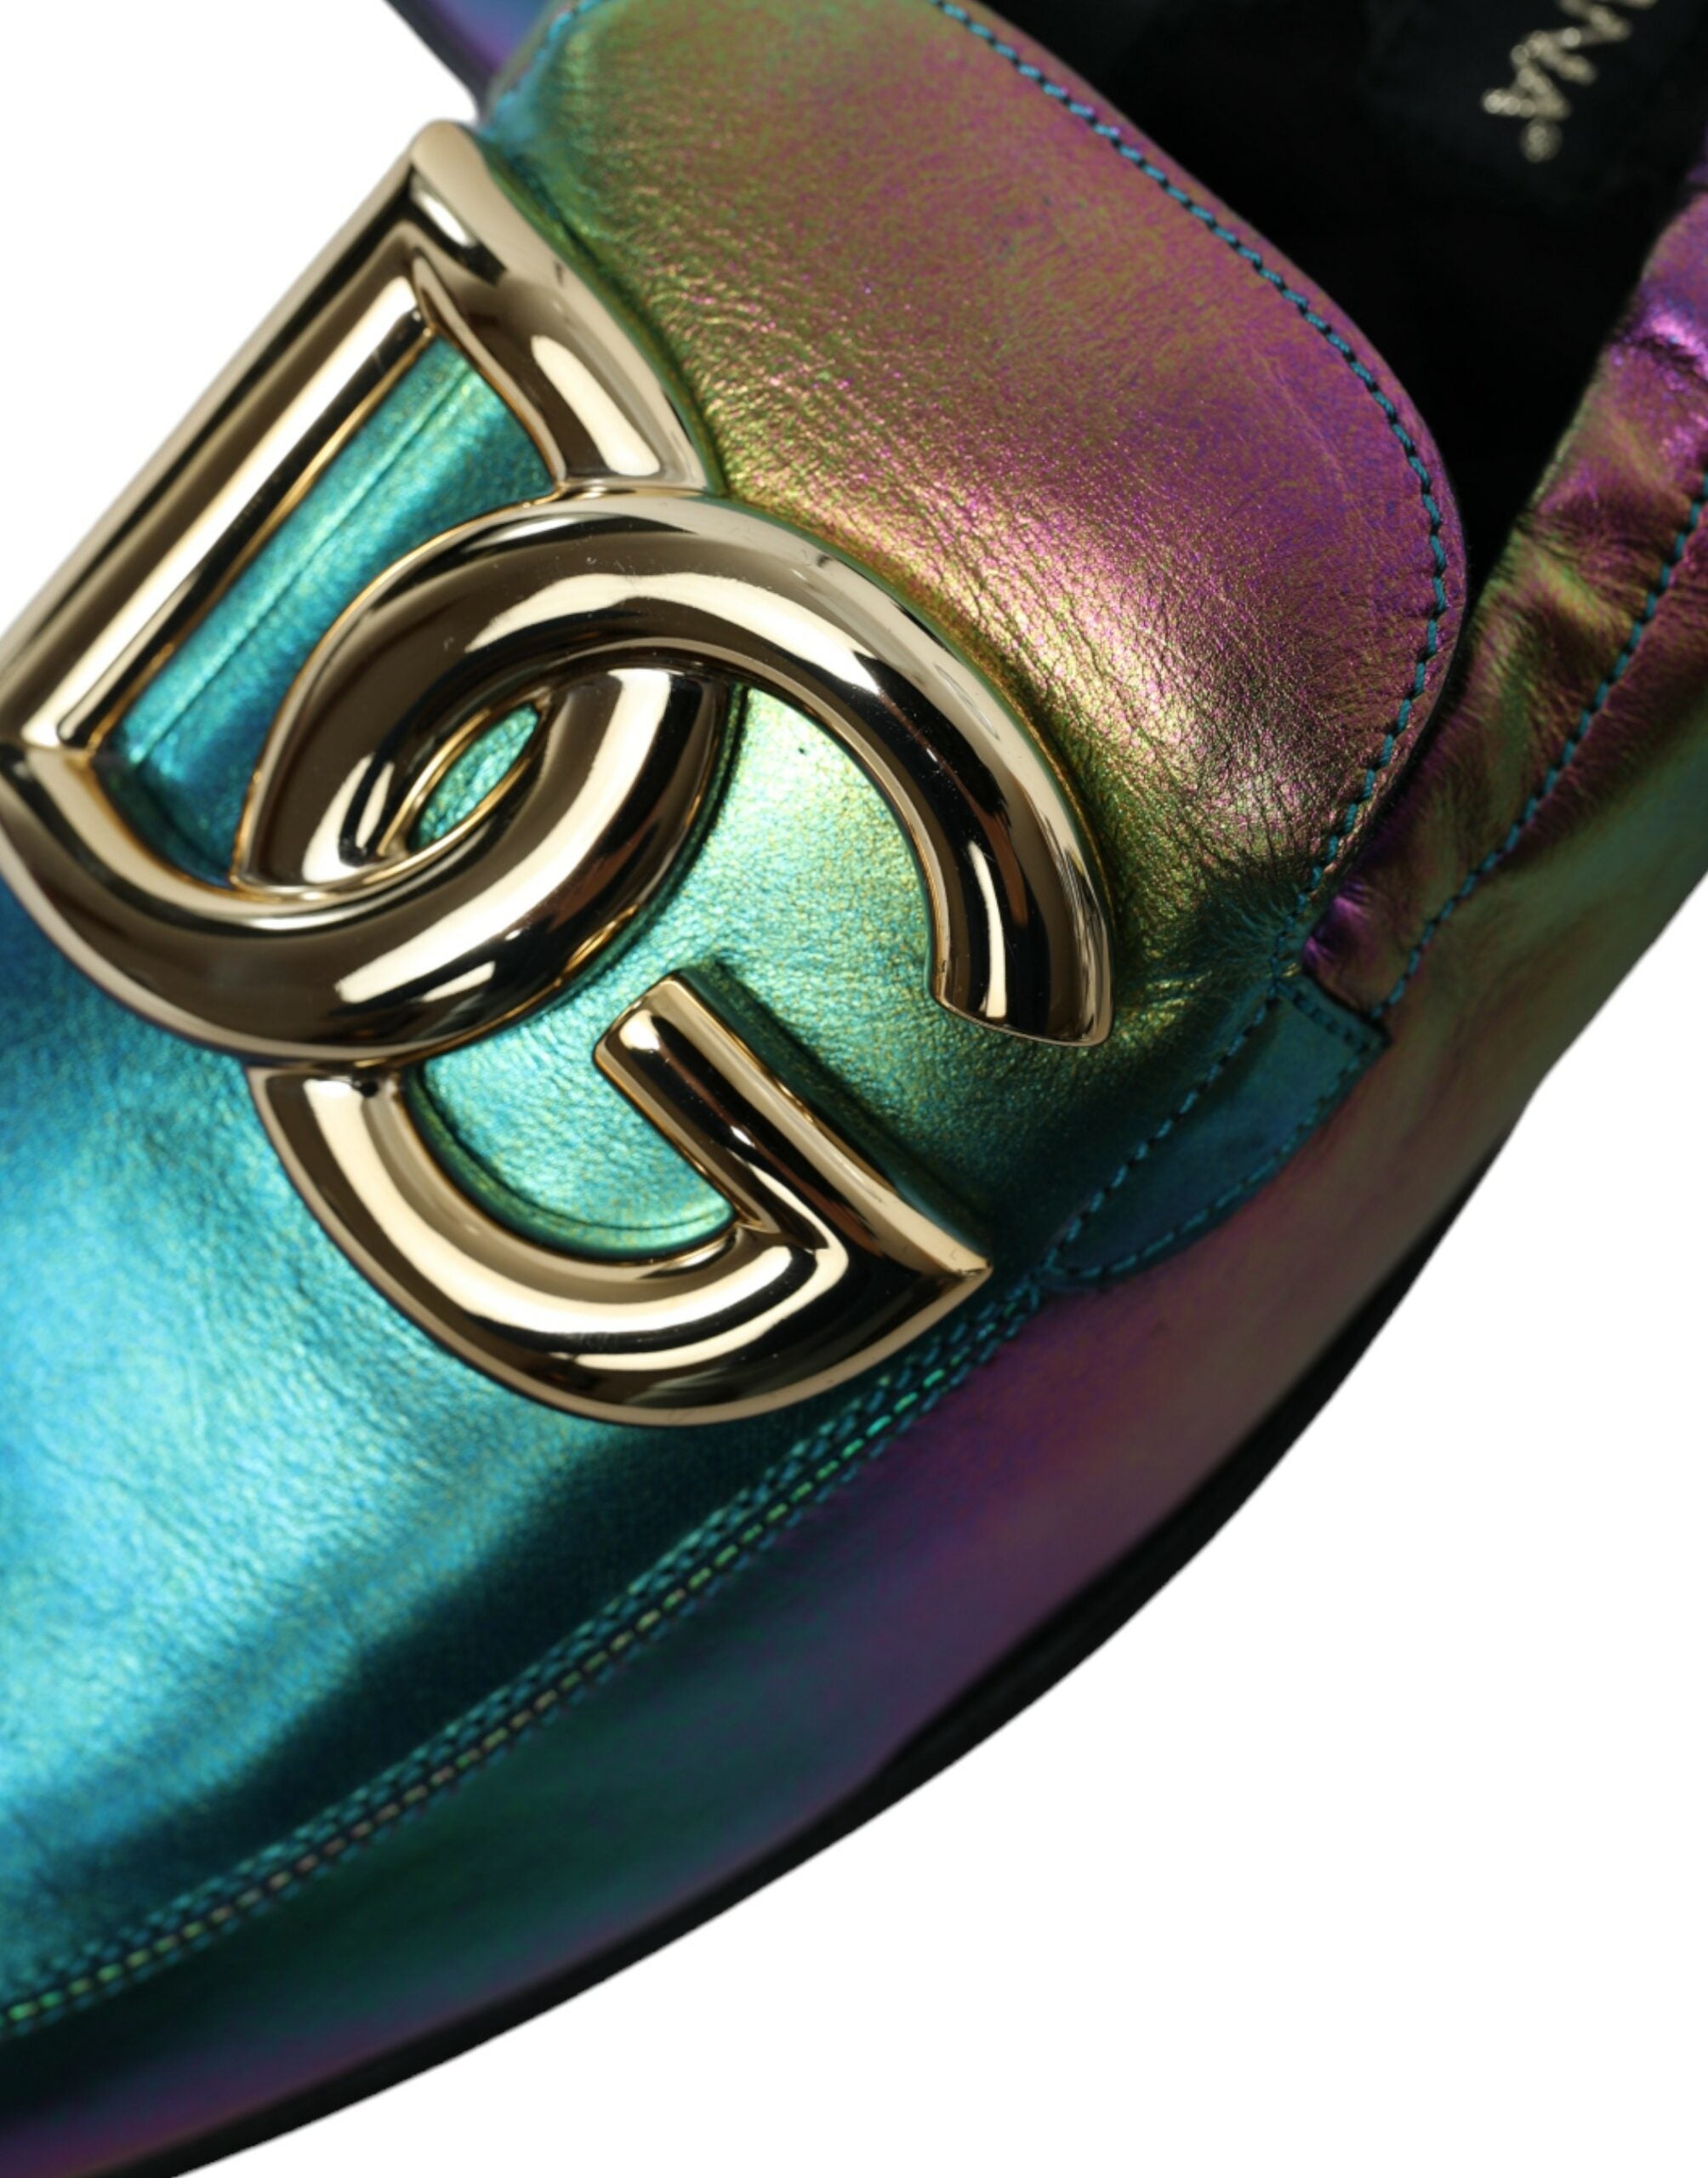 Dolce & Gabbana Elegant Iridescent Loafers for Gents